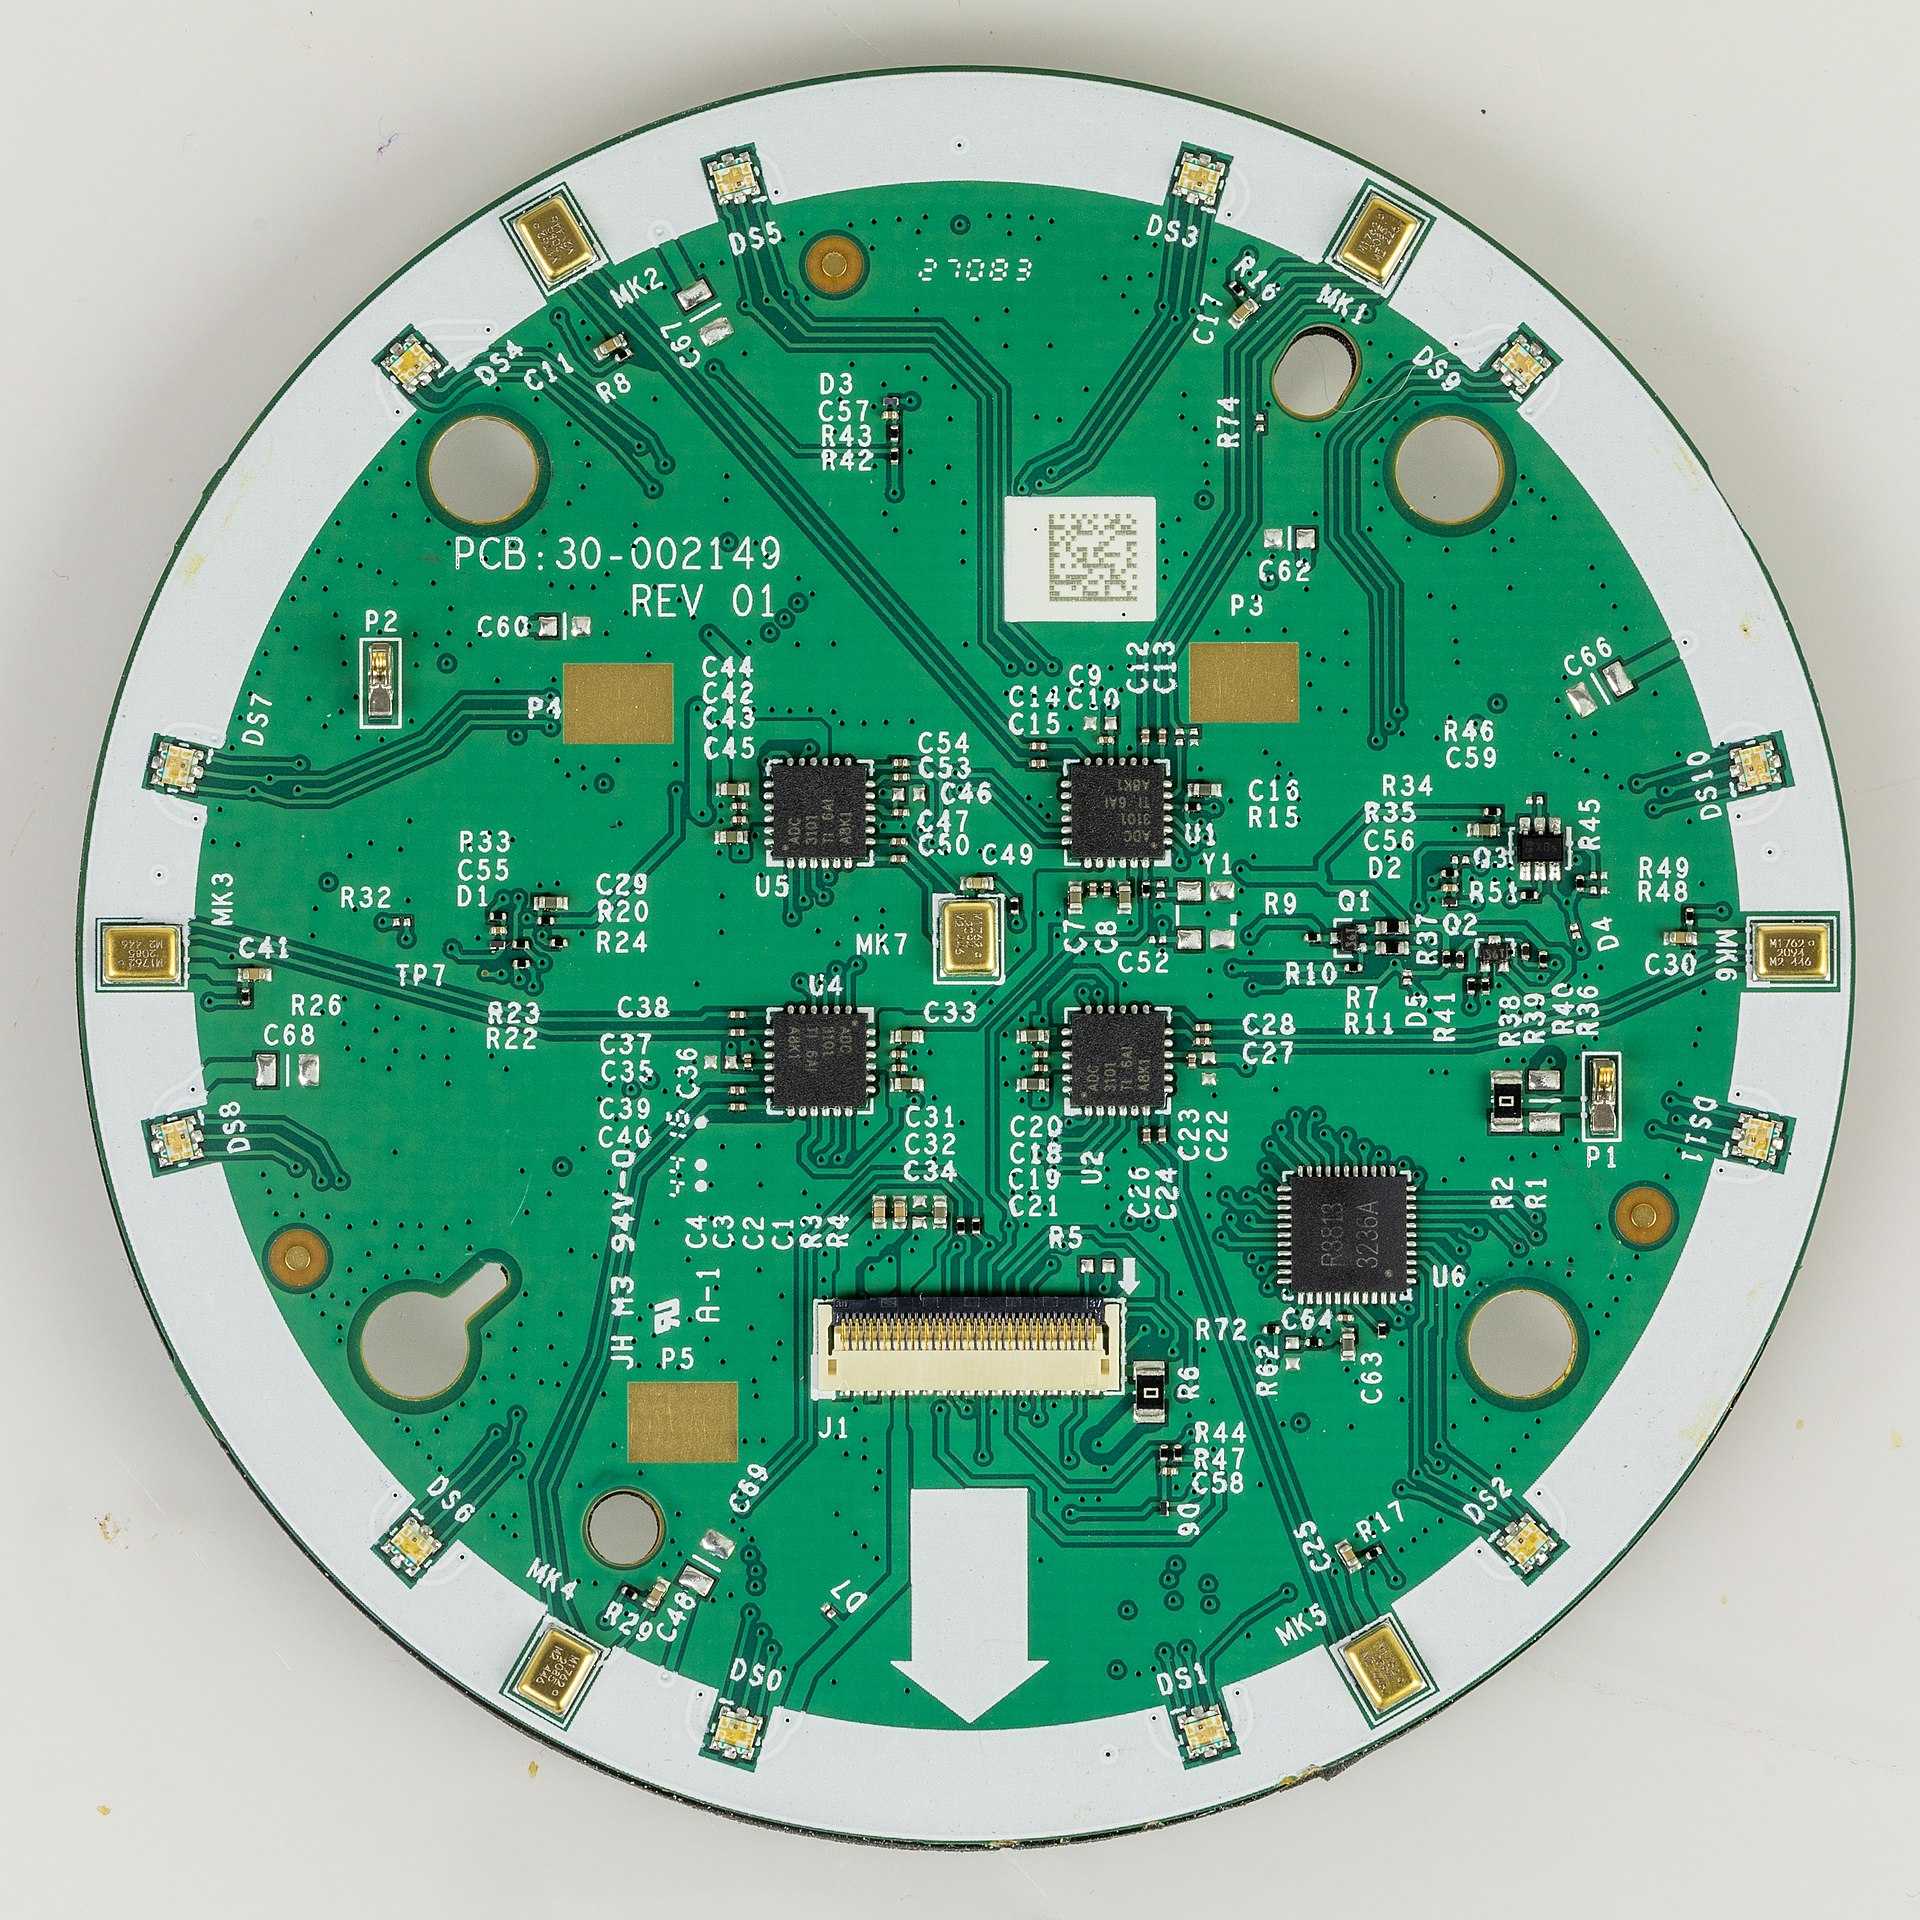 A circular circuit board from inside an Amazon Echo smart speaker device.